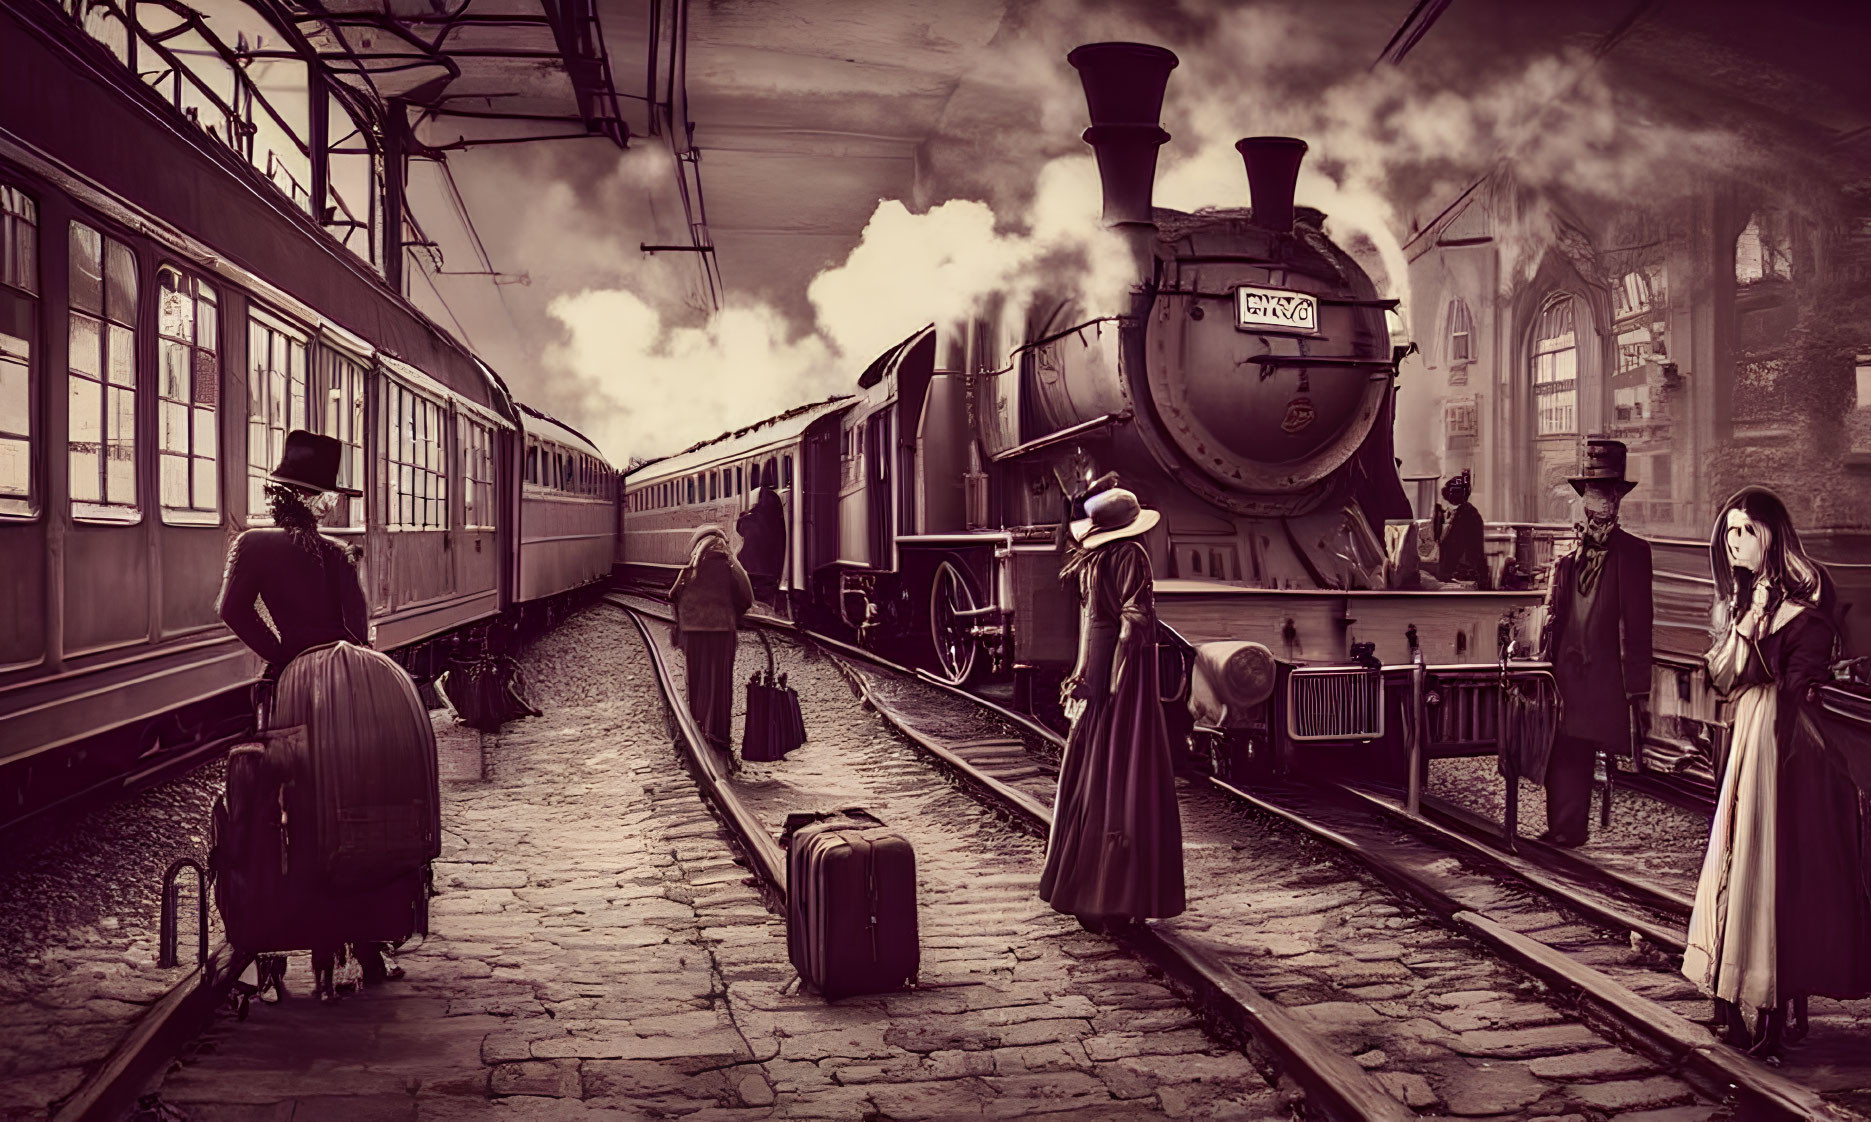 Sepia-Toned Image of Vintage Attired Passengers Waiting on Platform